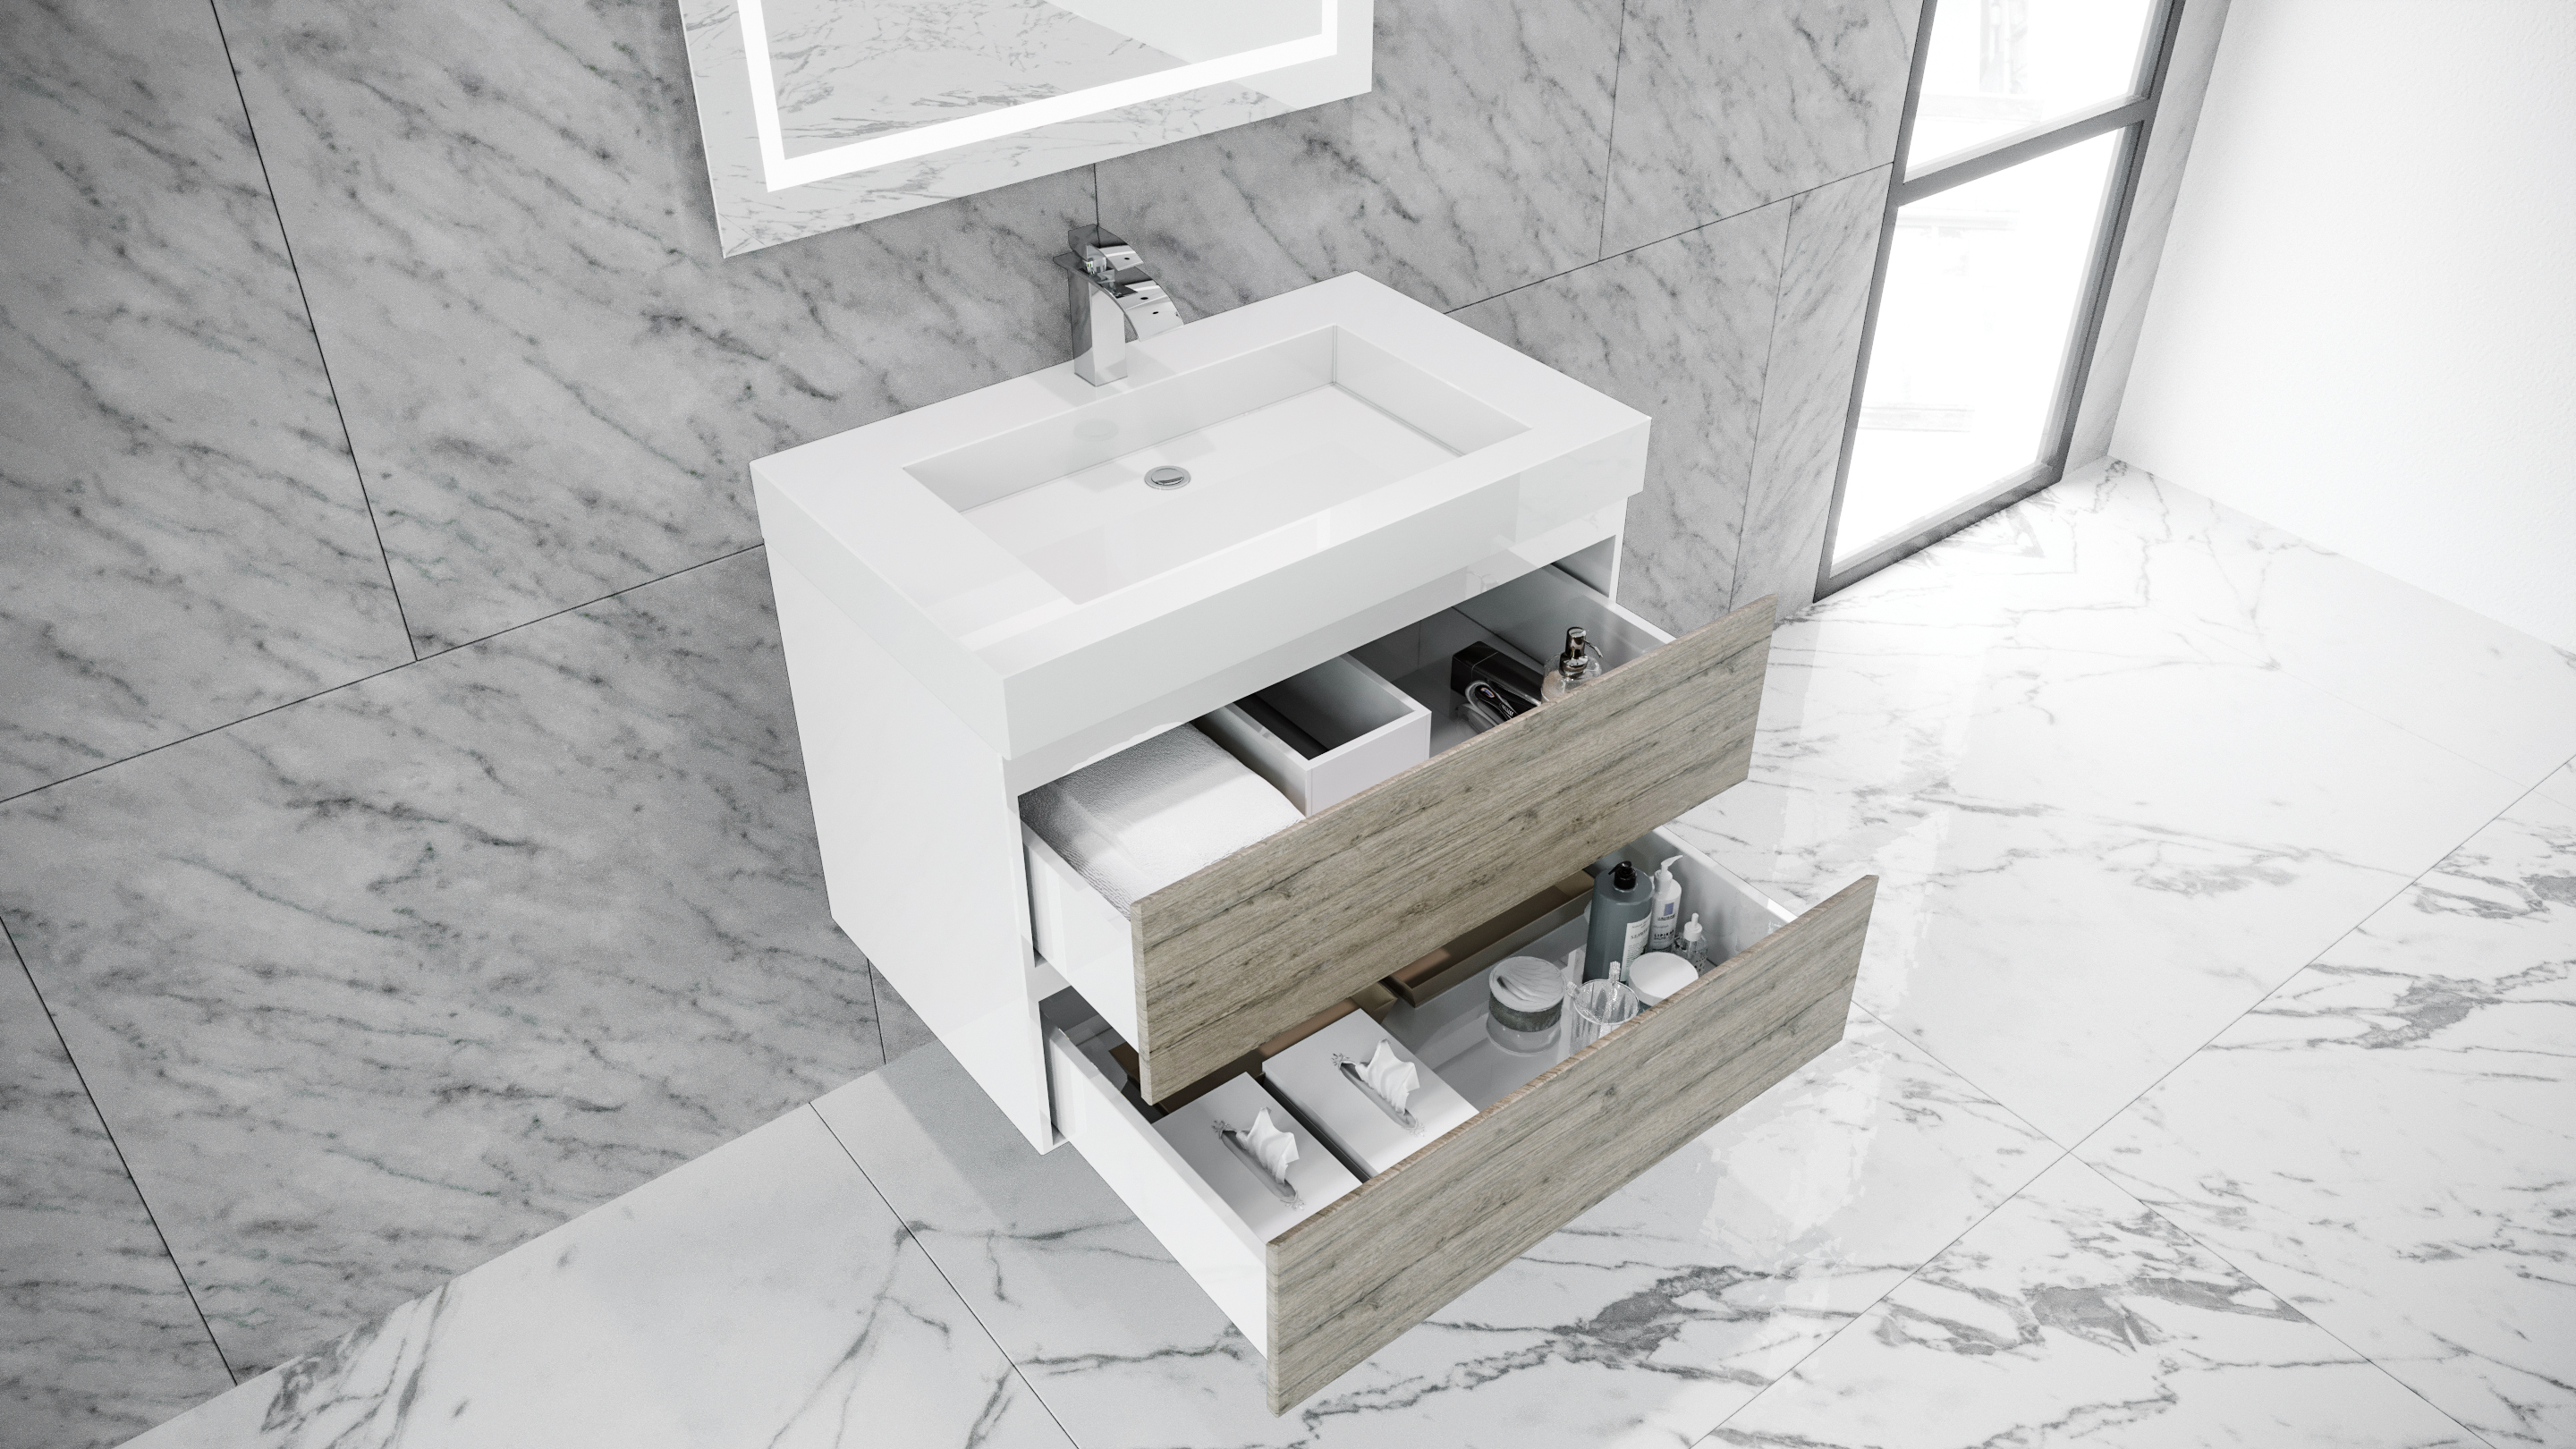 Queen 30" Rustic Gray White Wall Mount Single Sink Modern Bathroom Vanity